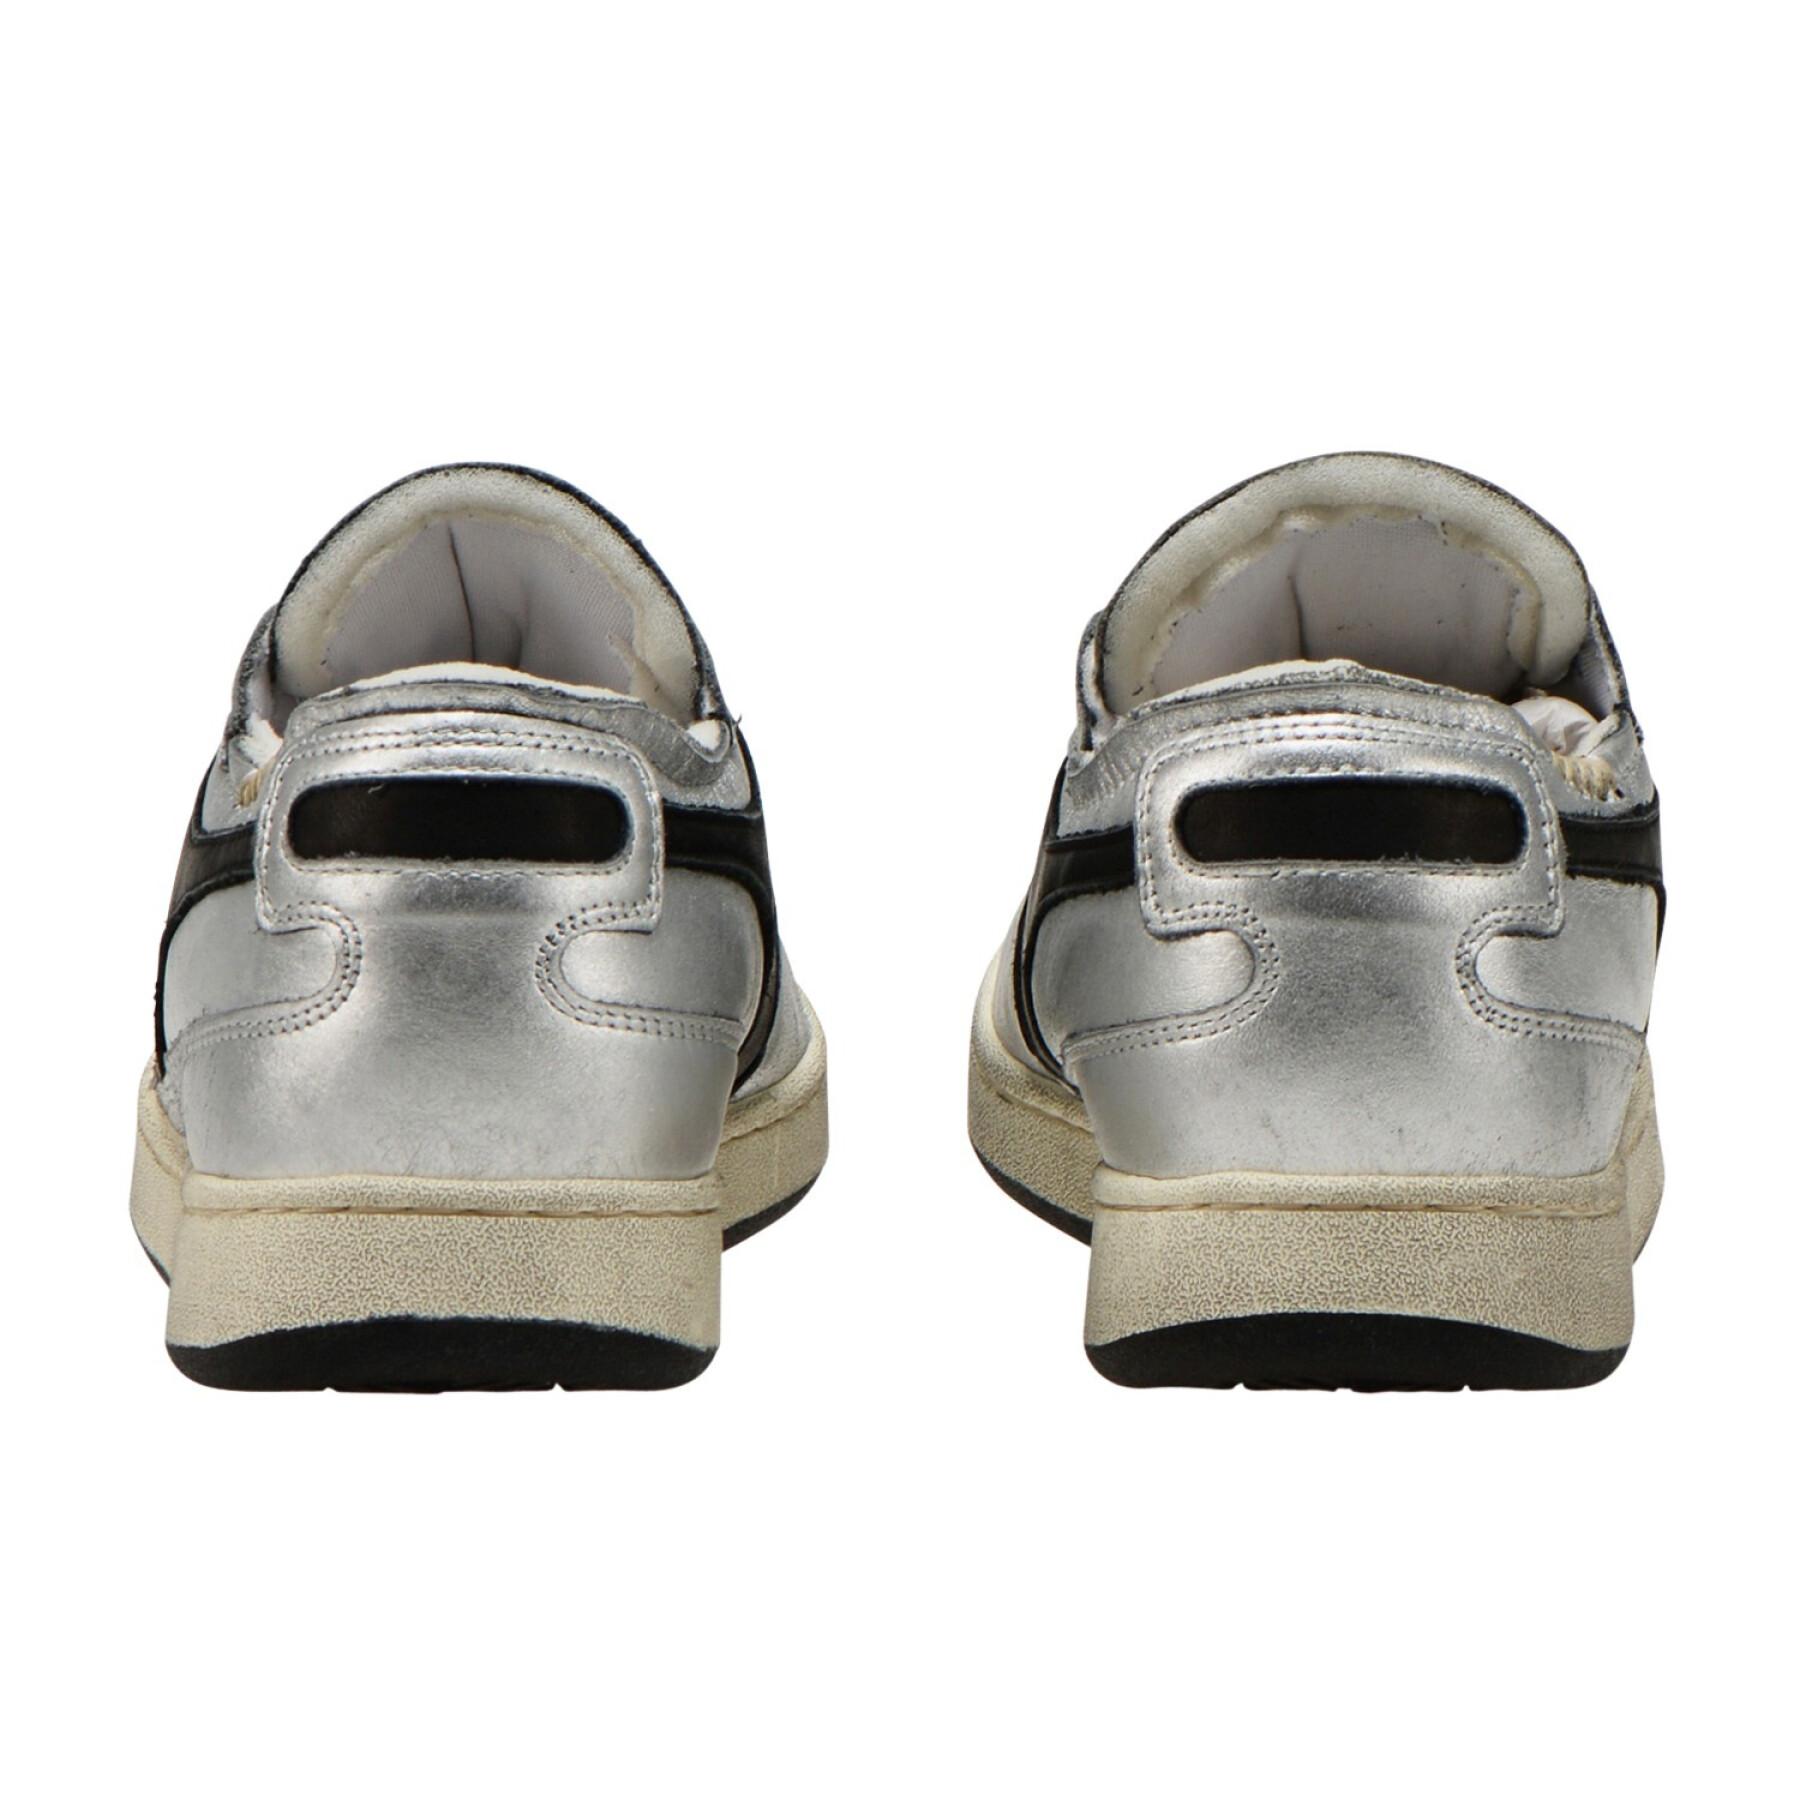 Women's sneakers Diadora row cut silver used